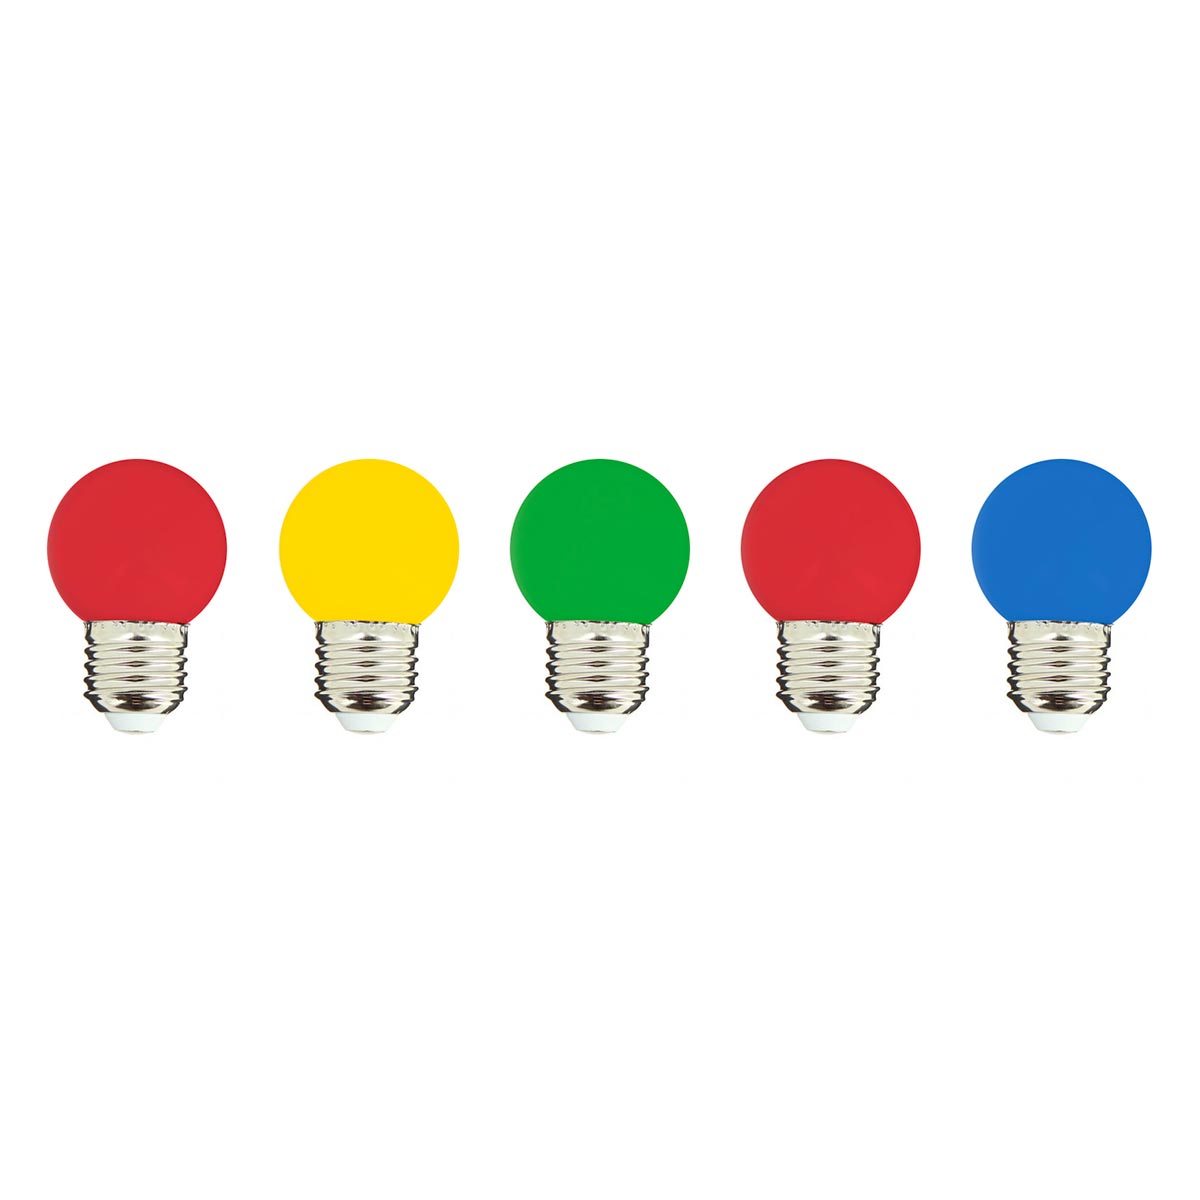 Set of 5 LED bulbs E27 multicolored globe compatible garland PARTY BULB COLOR H7cm